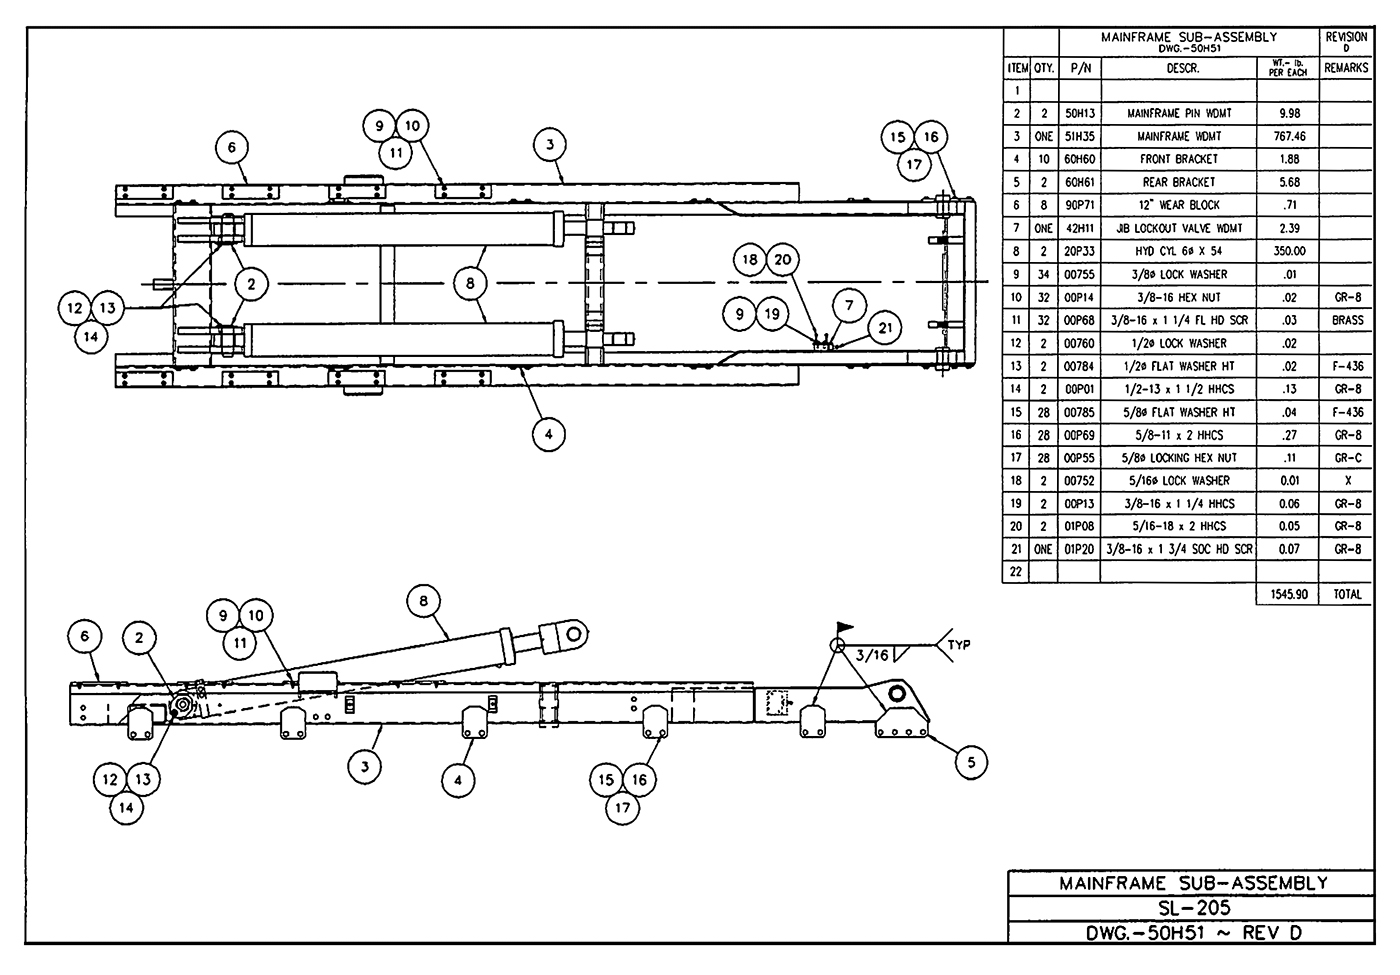 SL-205 Mainframe Sub-Assembly Diagram